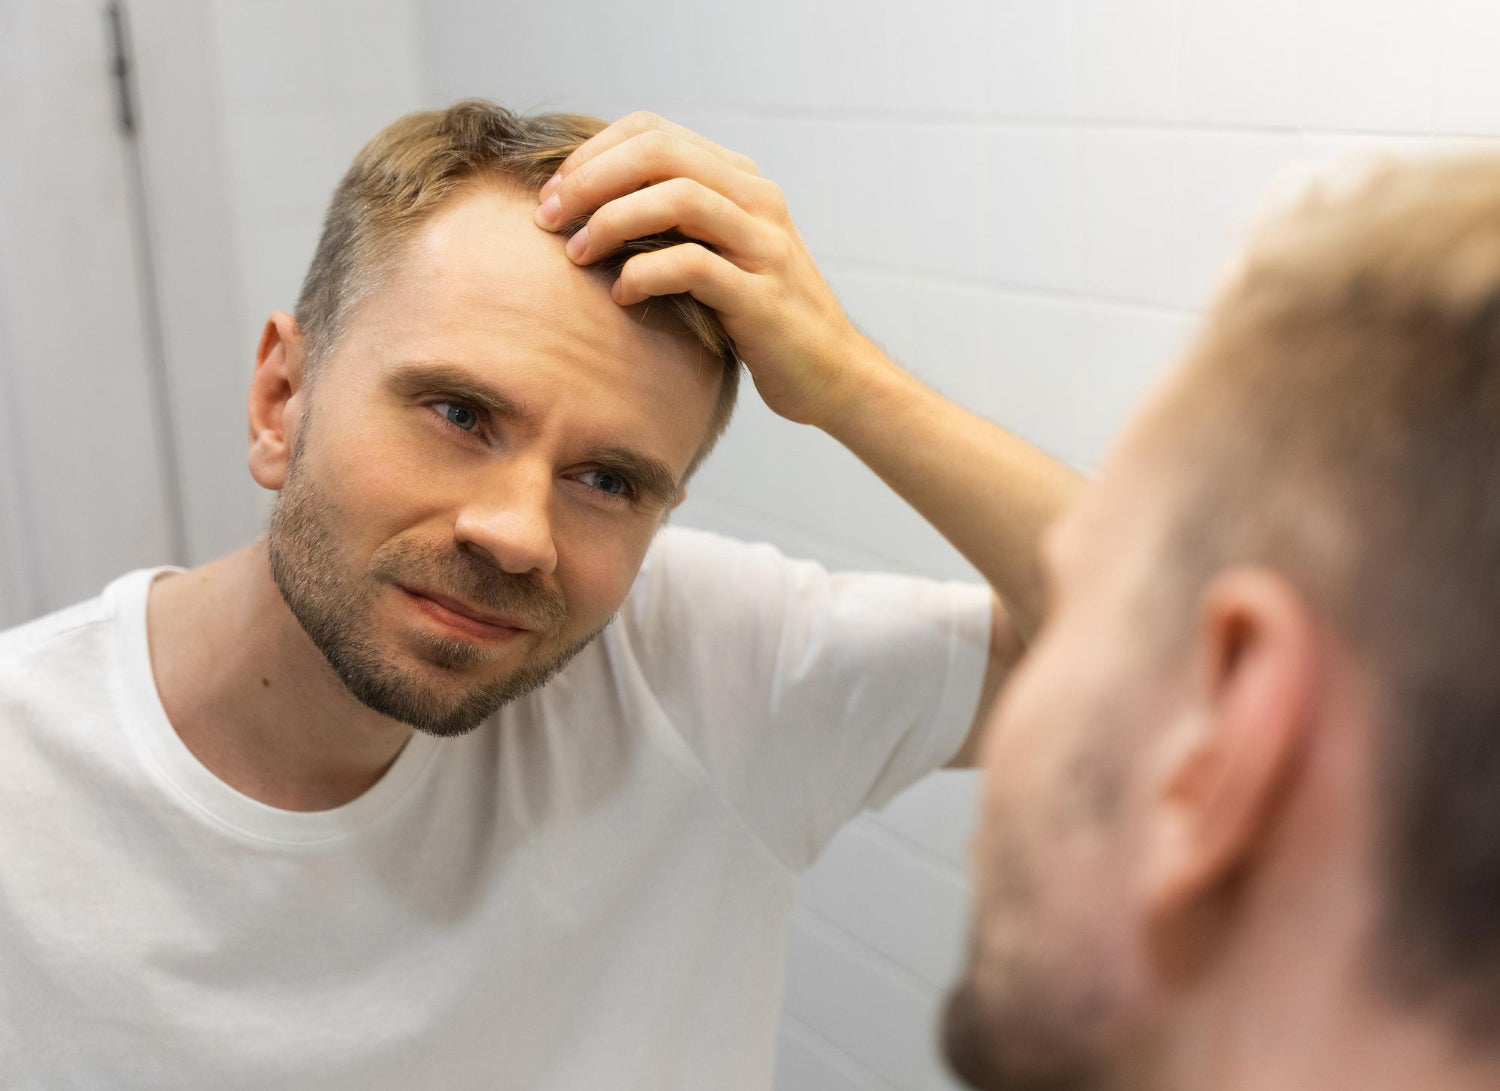 Emotional Impact of Hair Loss on Self-Esteem